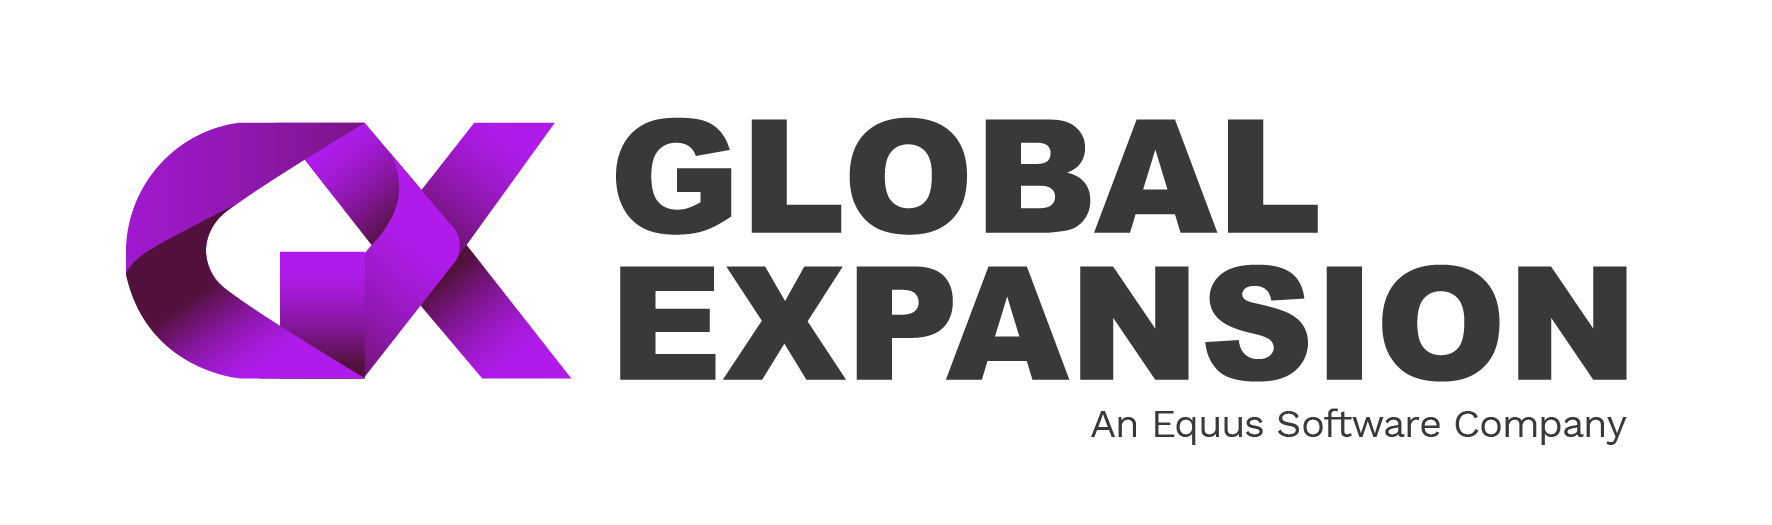 GlobalEx-Logo-2020-Main